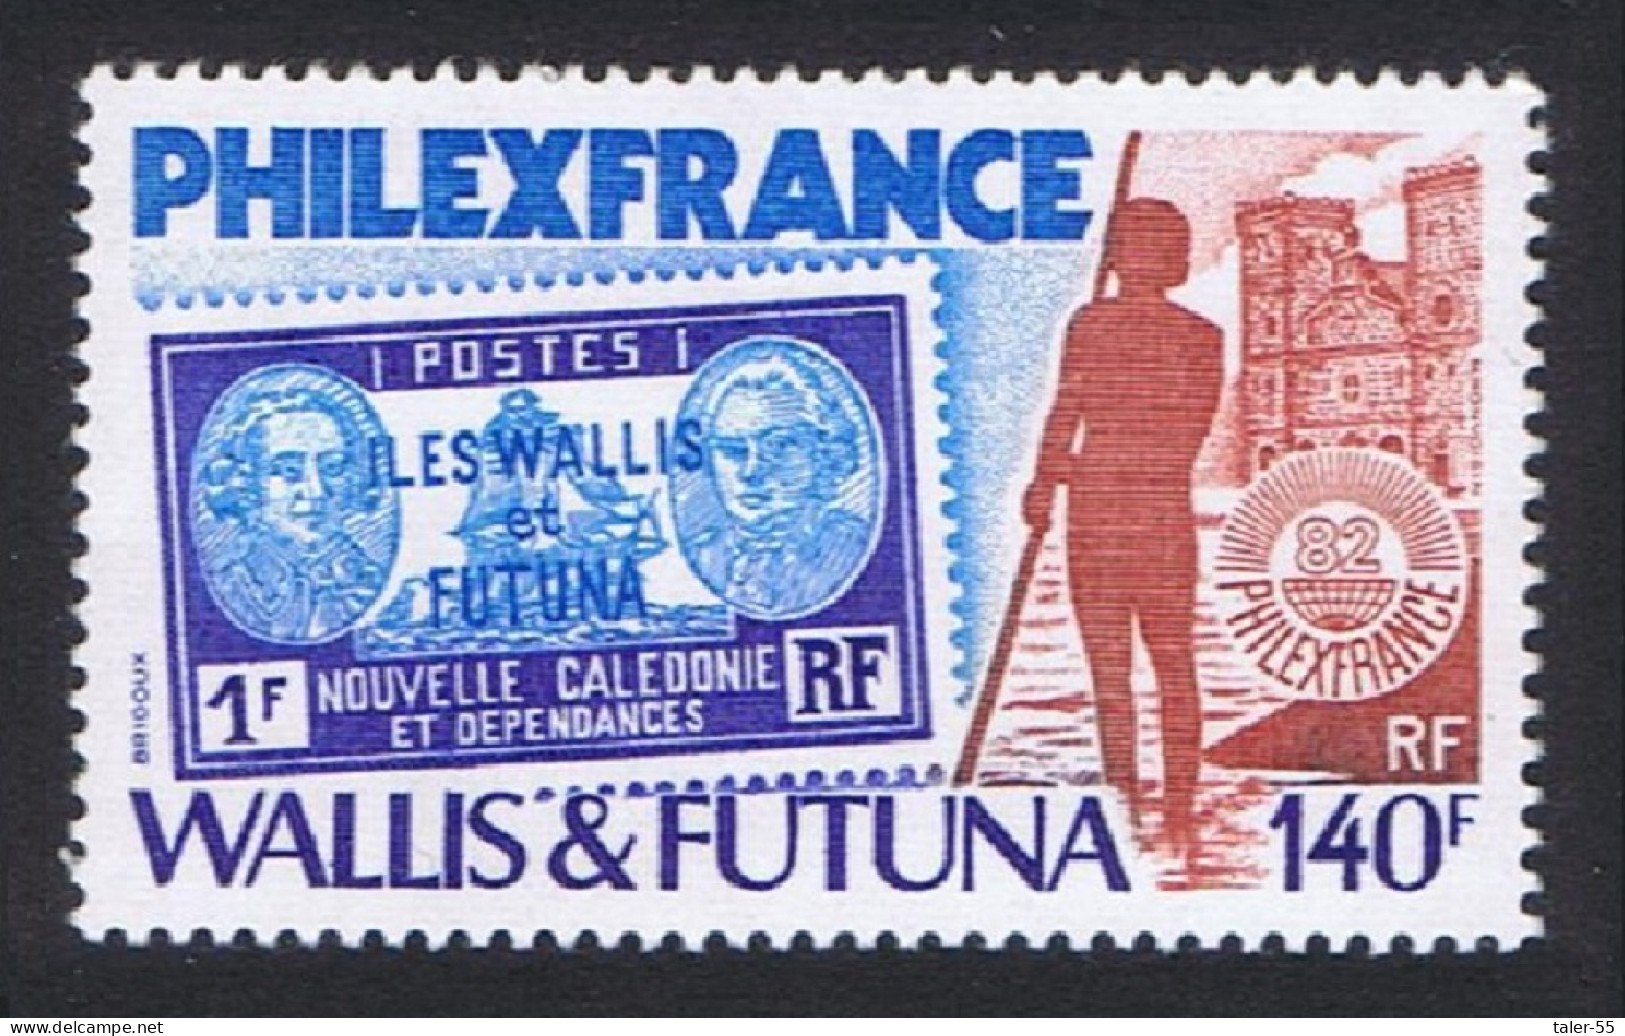 Wallis And Futuna 'Philexfrance 82' Stamp Exhibition 1982 MNH SG#395 Sc#282 - Nuovi